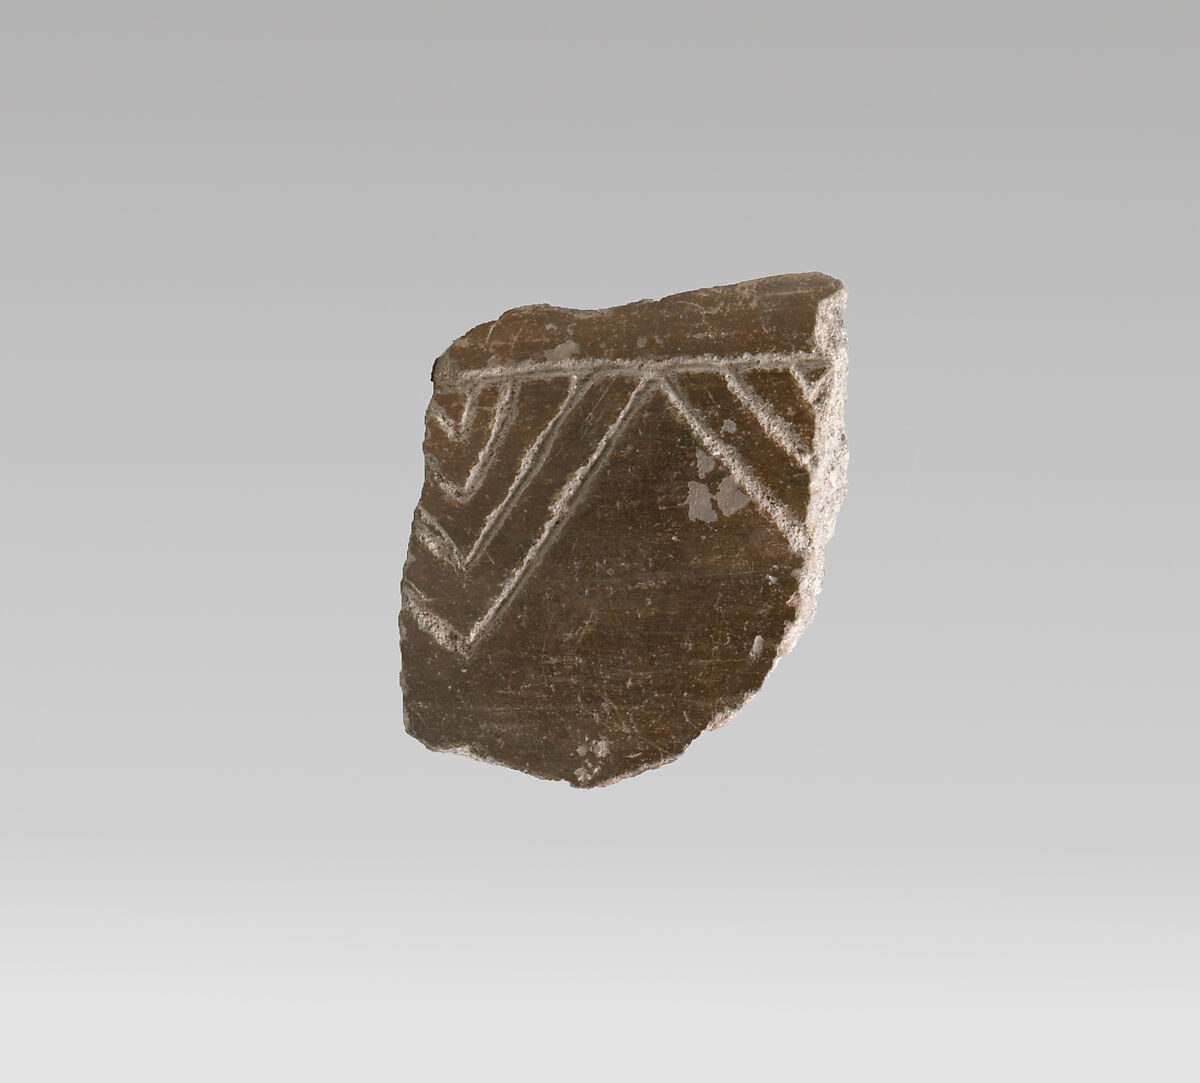 Terracotta vessel fragment with incised decoration, Terracotta, Cretan 